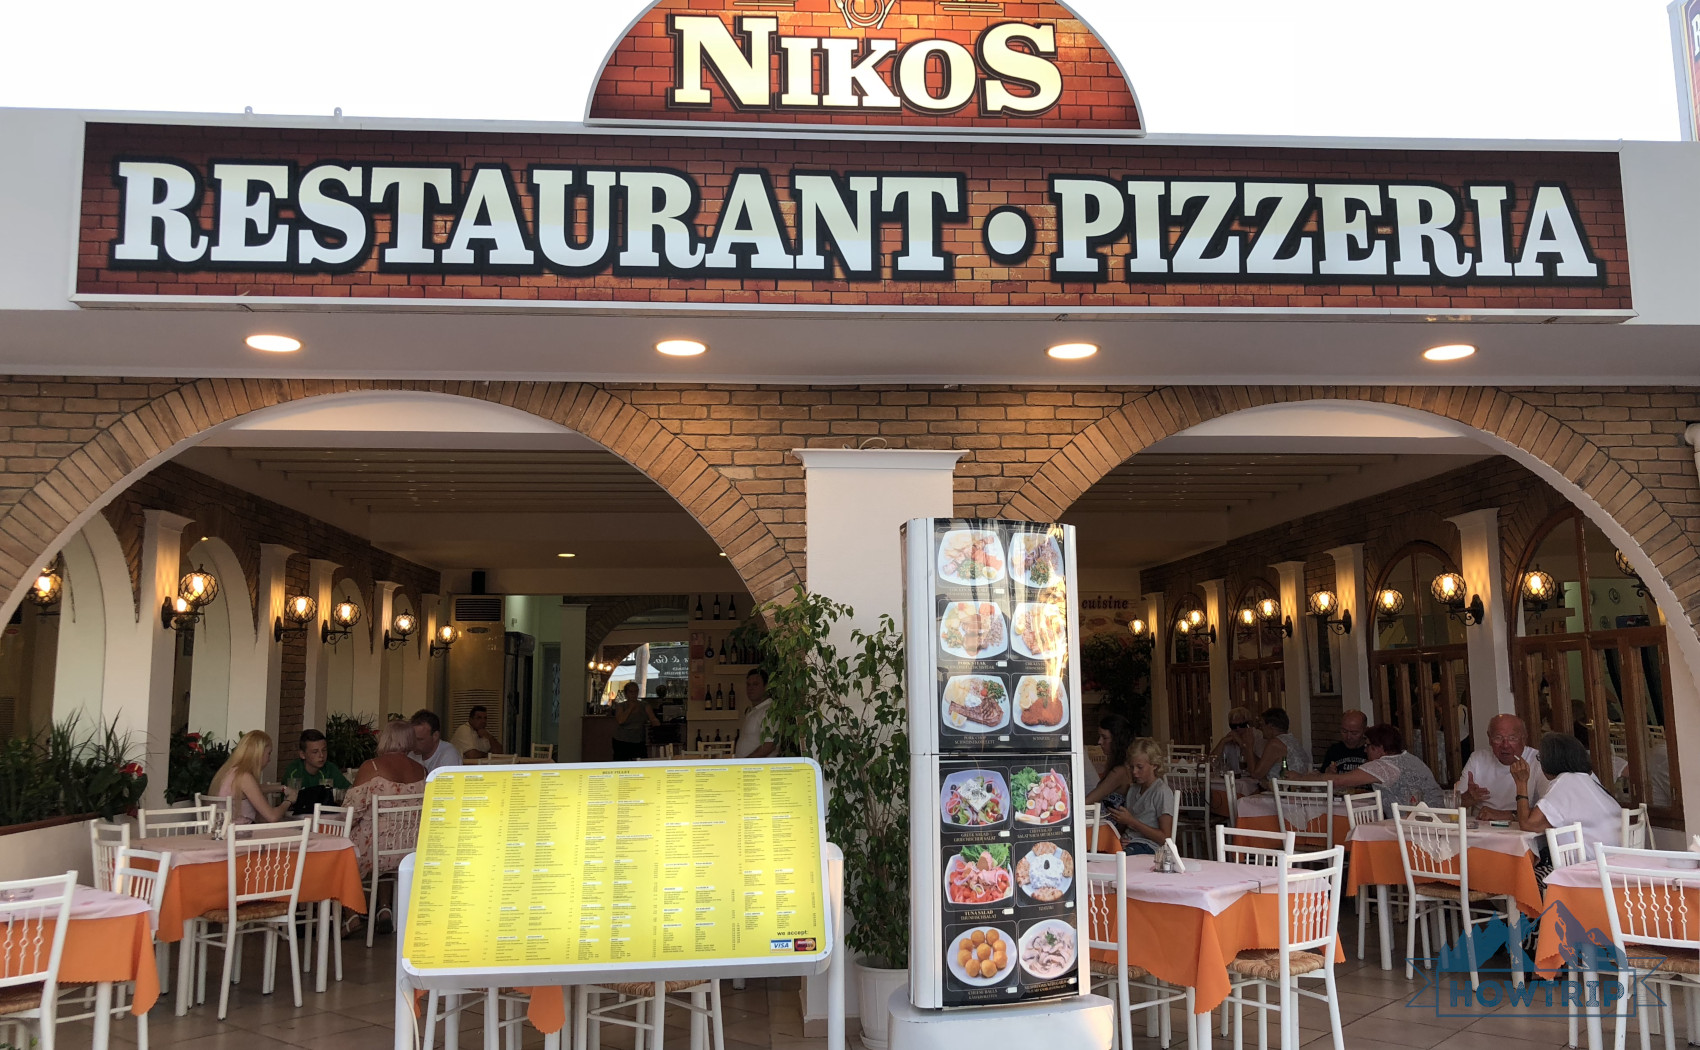 Nikos restaurant